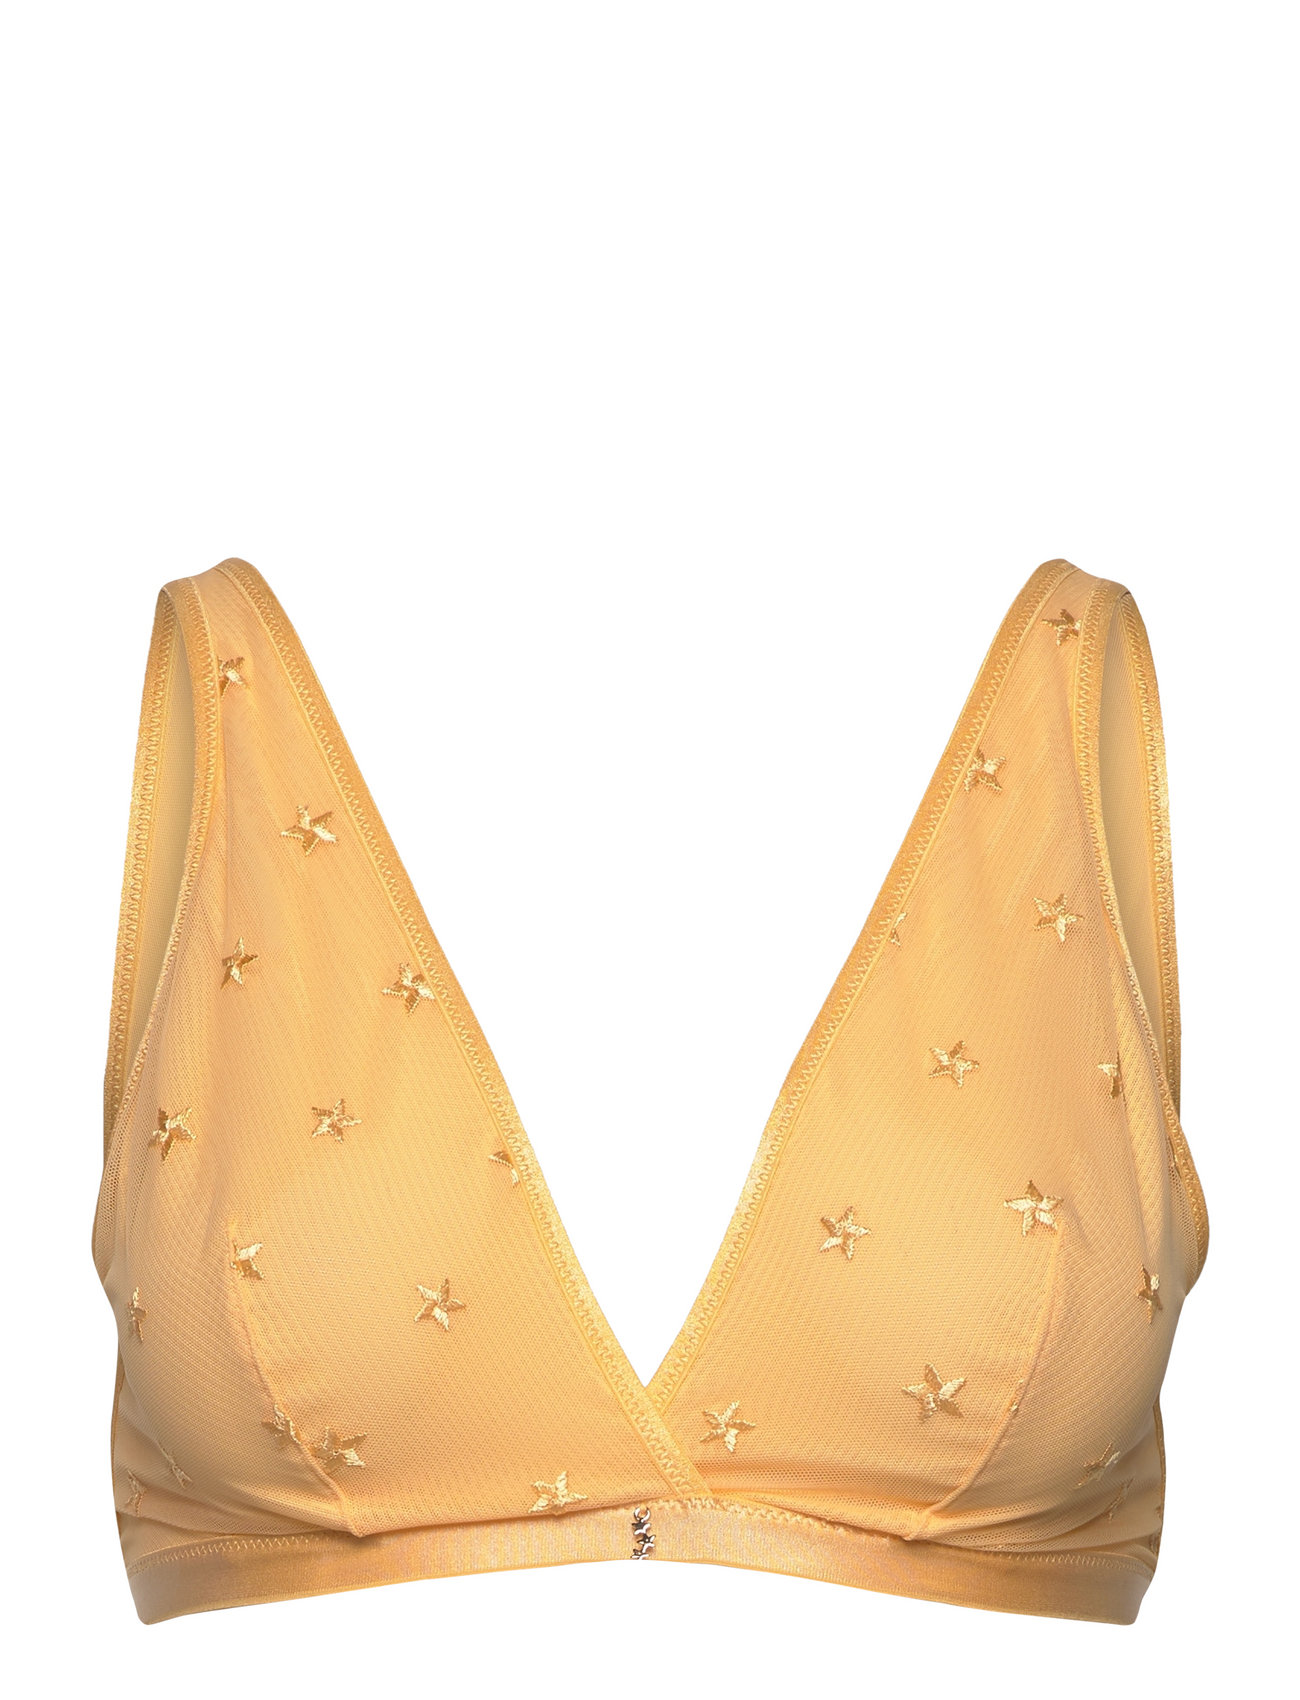 Women's bra Freya Snapshot Star - Underwear - Clothing - Women